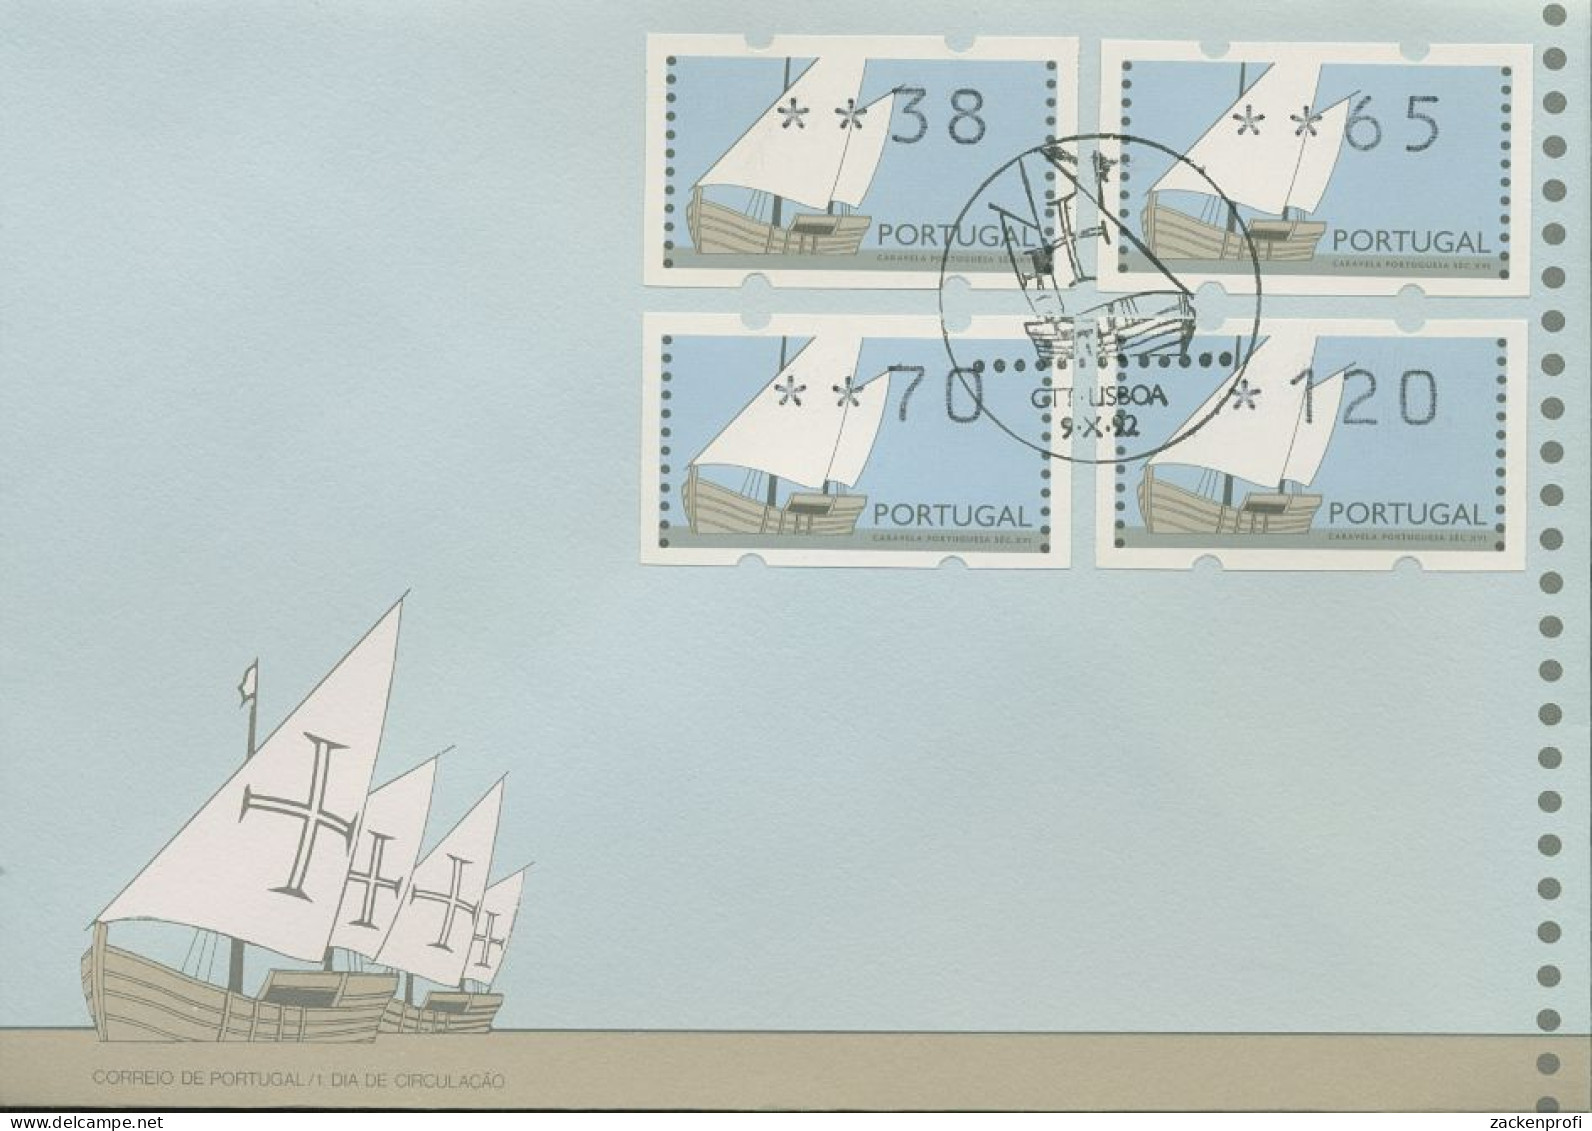 Portugal ATM 1992 Segelschiffe Satz 4 Werte 38/65/70/120 ATM 5 S1 FDC (X80359) - Vignette [ATM]